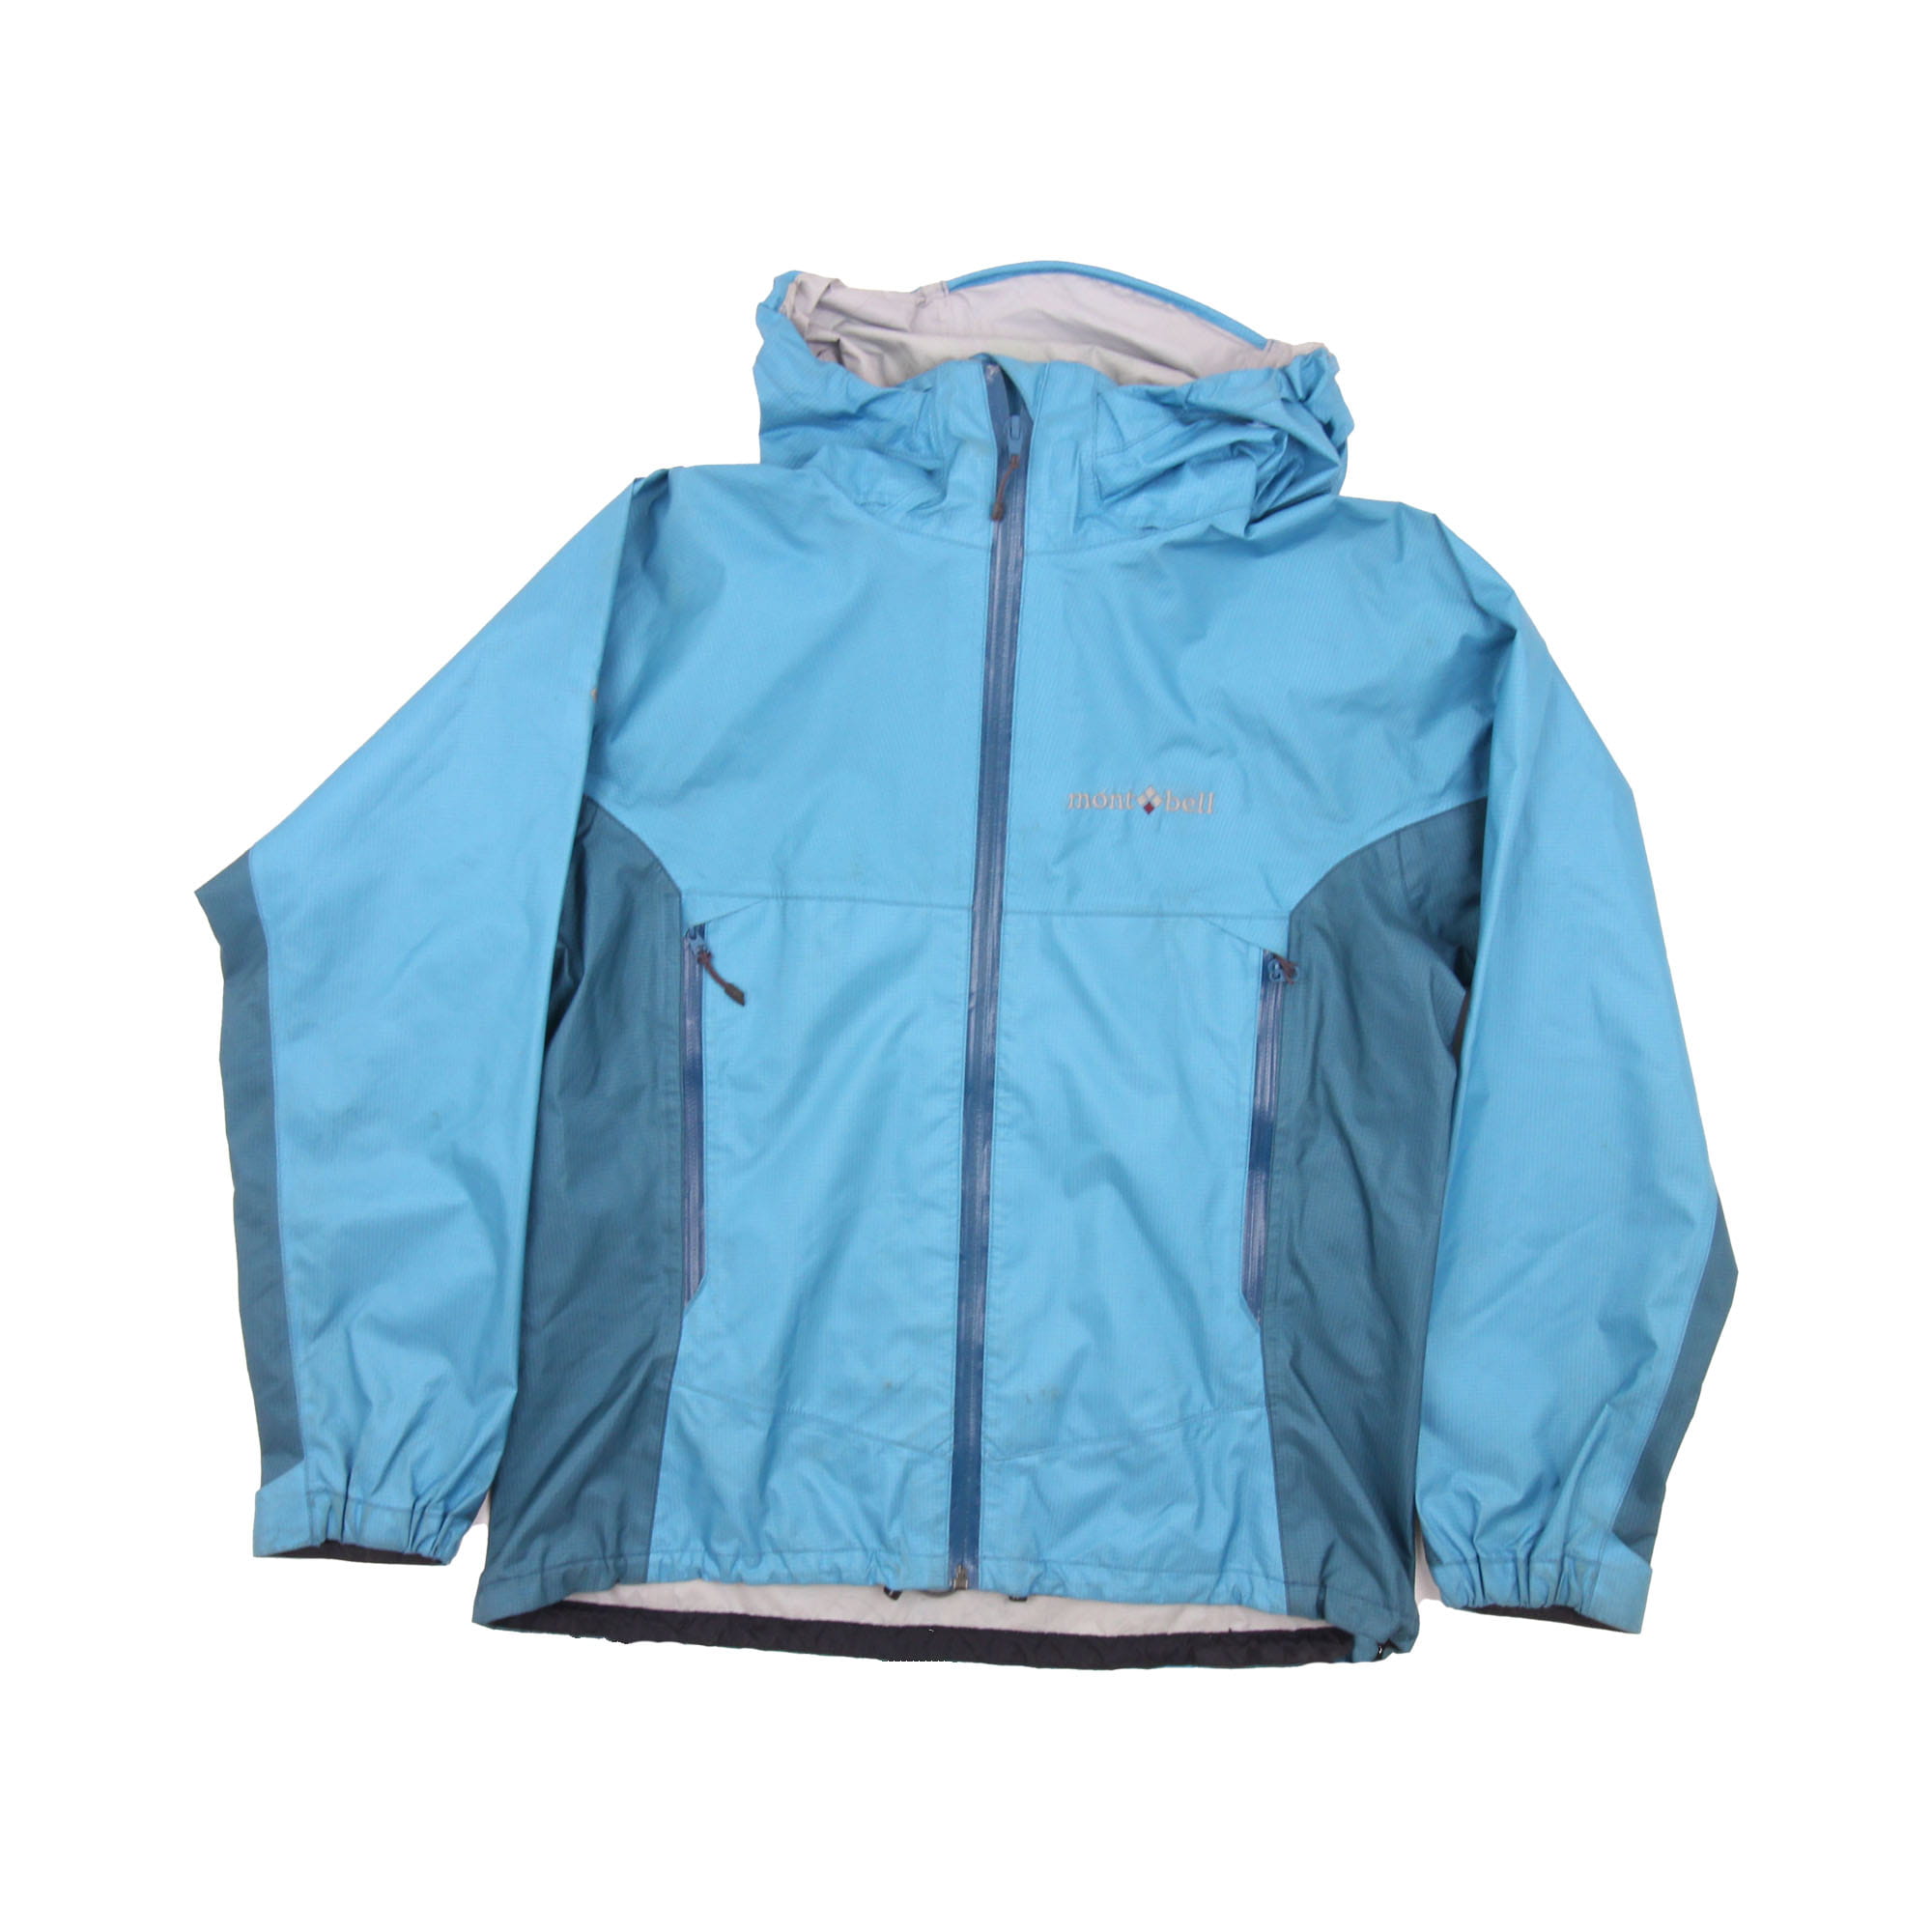 Montbell Rain Jacket Blue - S 